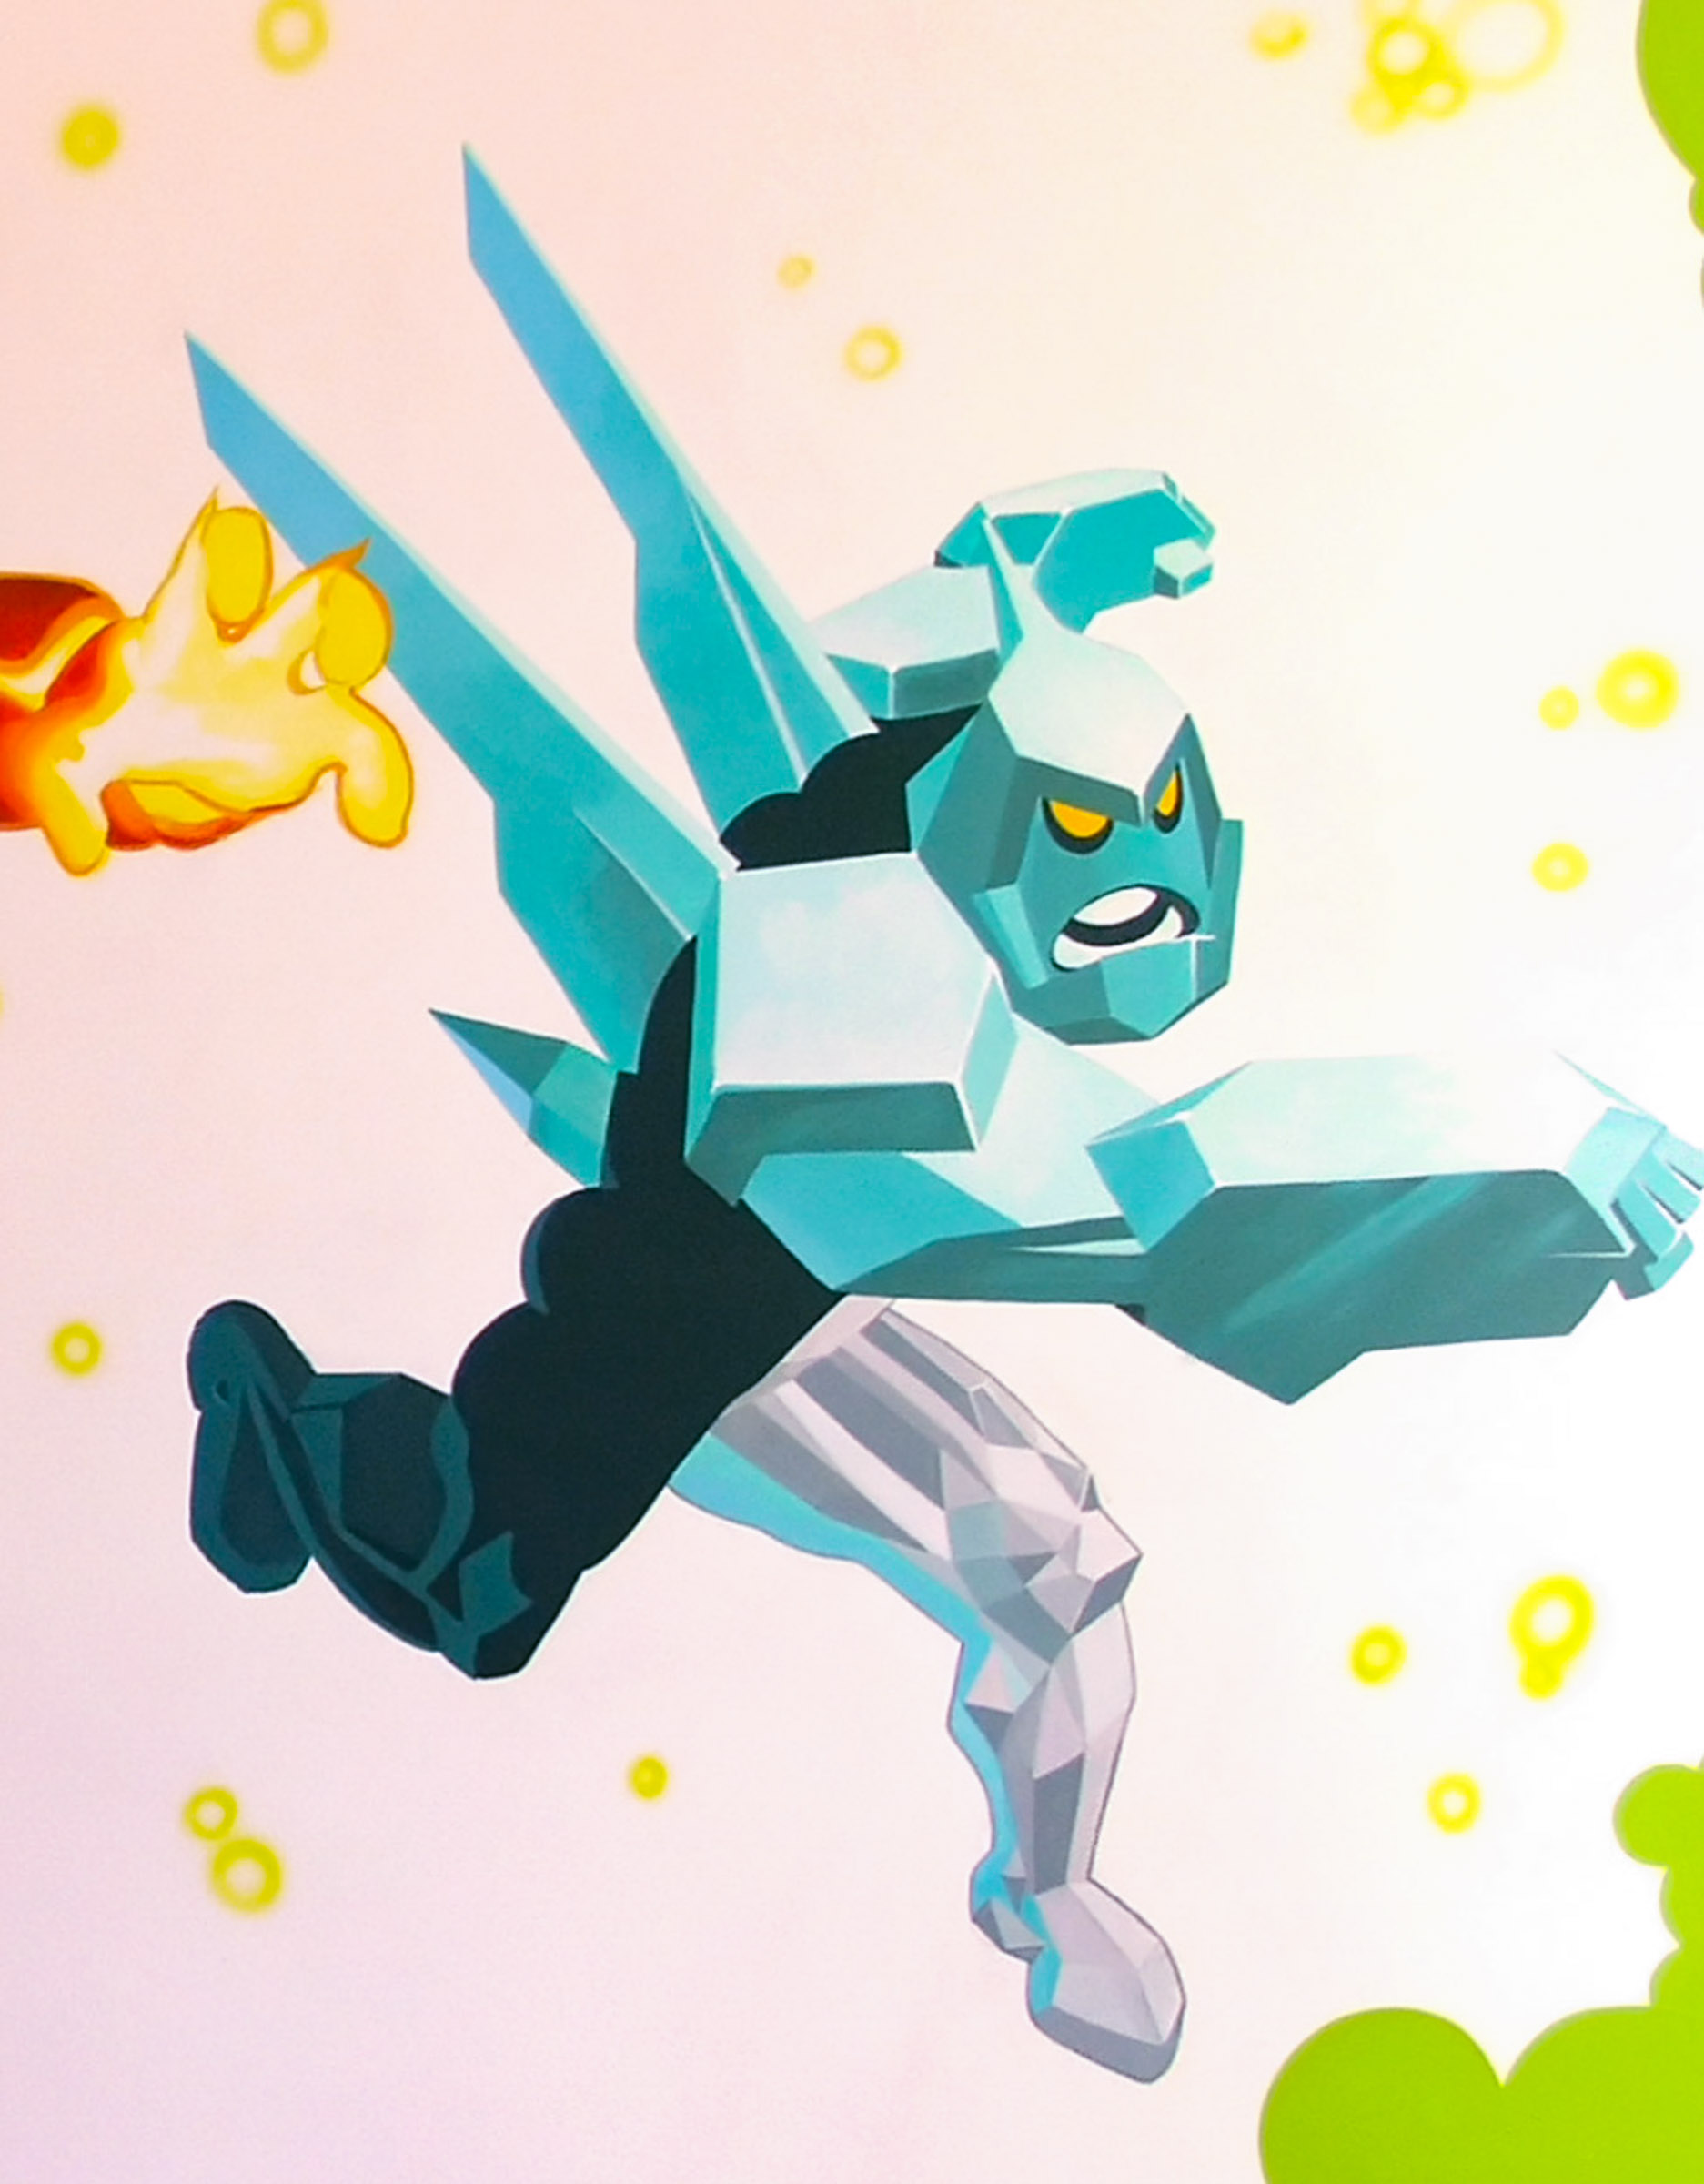 Diamondhead character on the Ben 10 mural